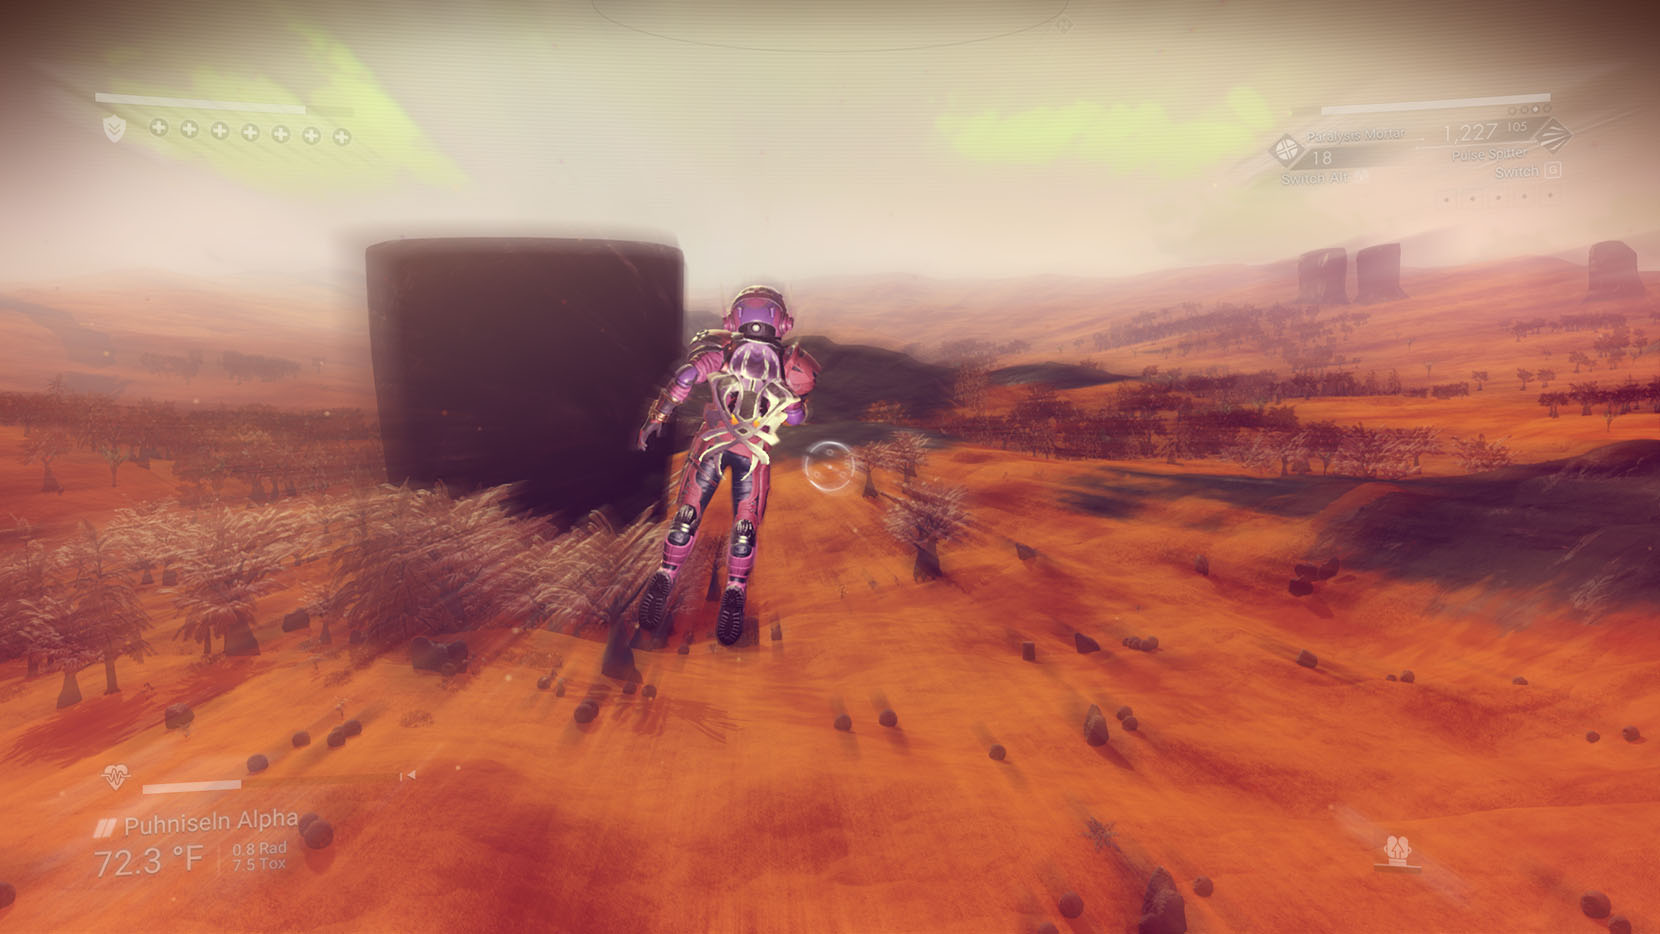 Melee reload jump trick - in flight screenshot